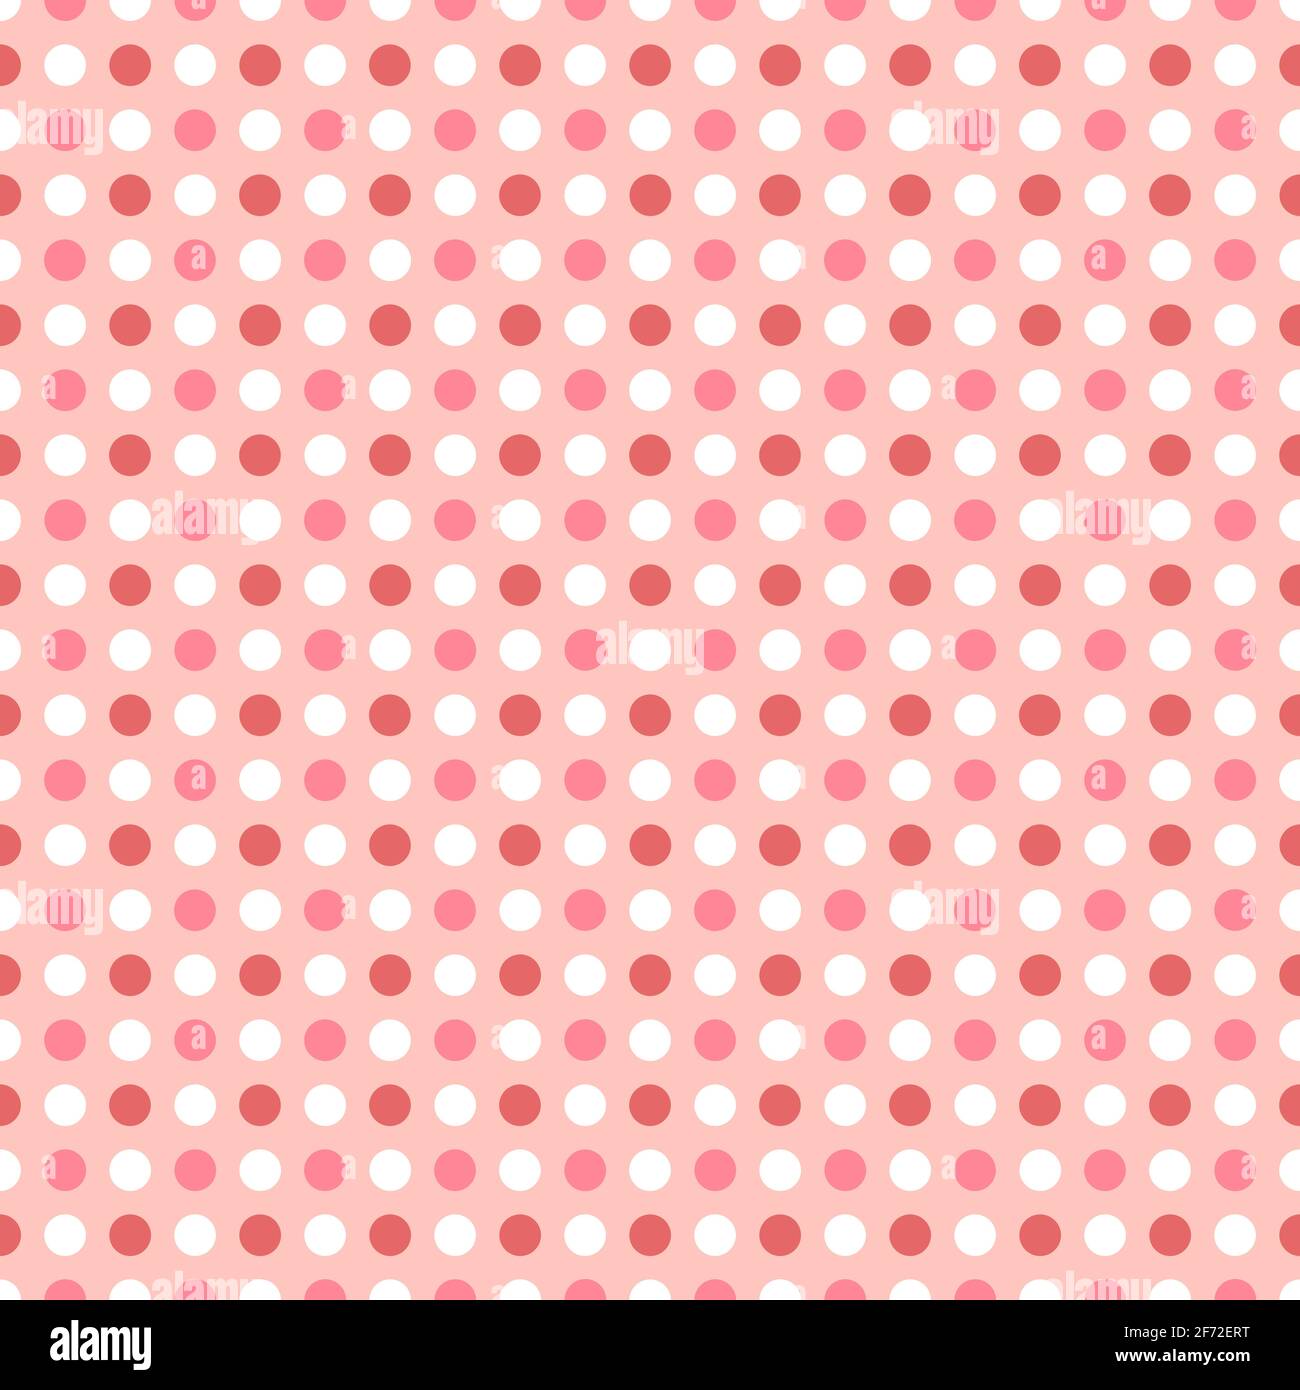 Vintage polka dots in vanilla pink tones. Optical illusion seamless pattern Stock Vector